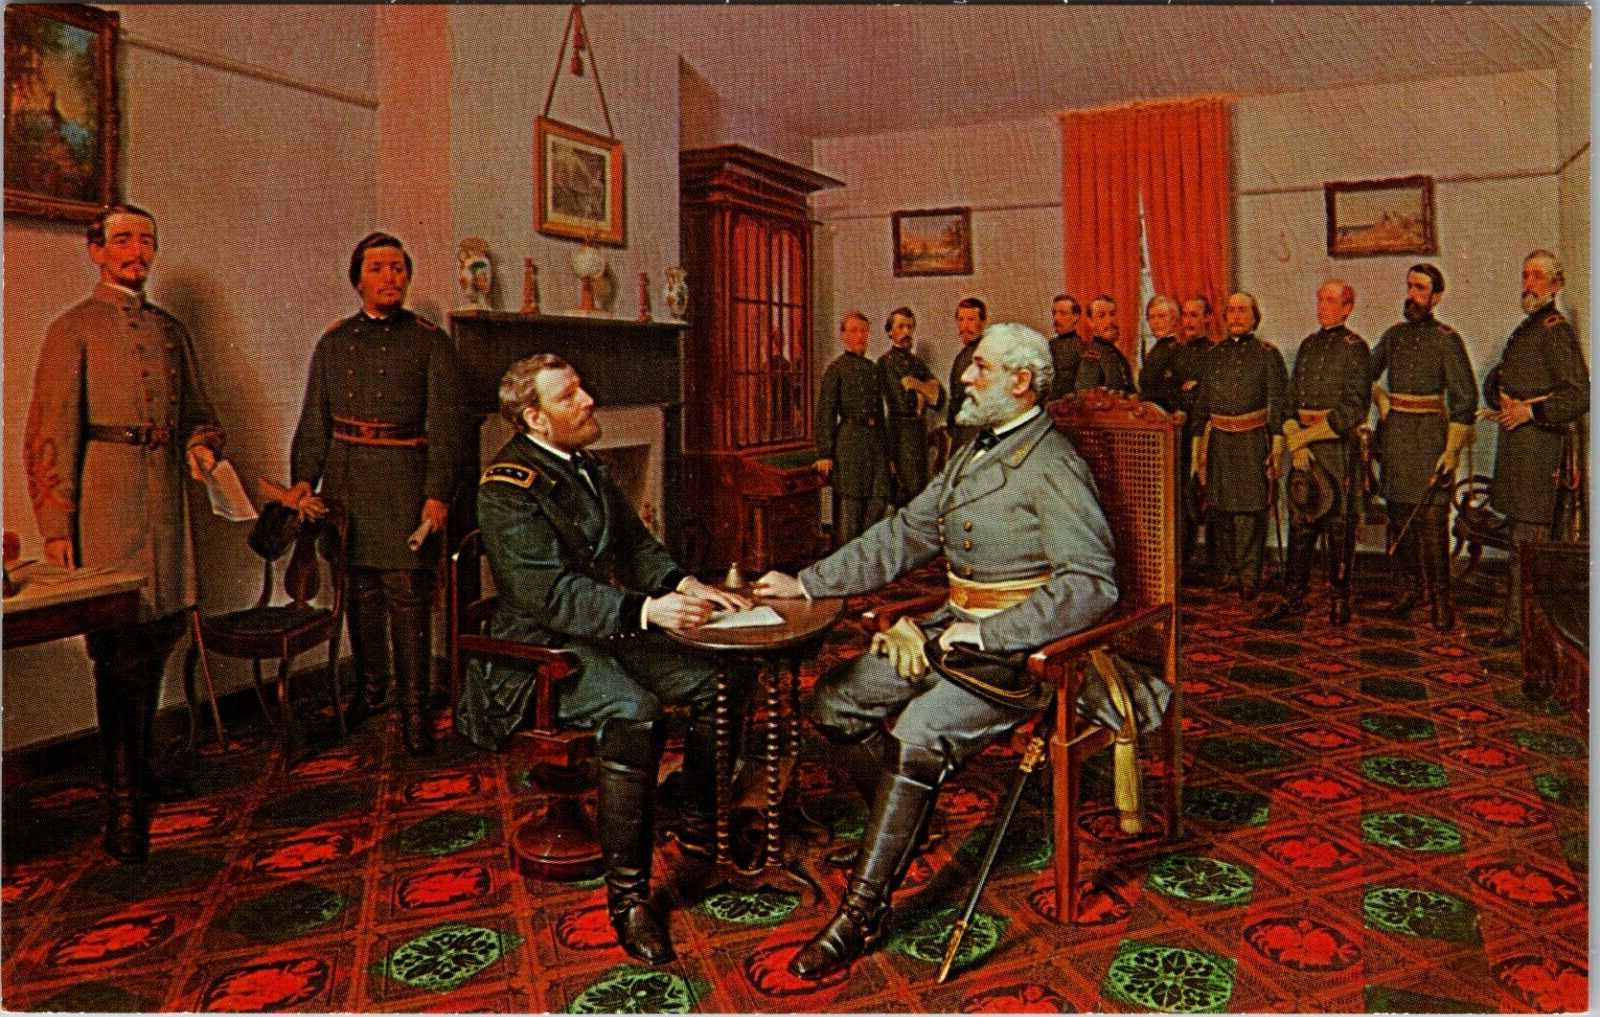 Civil War Postcard Surrender at Appomattox by General Lee to General Grant